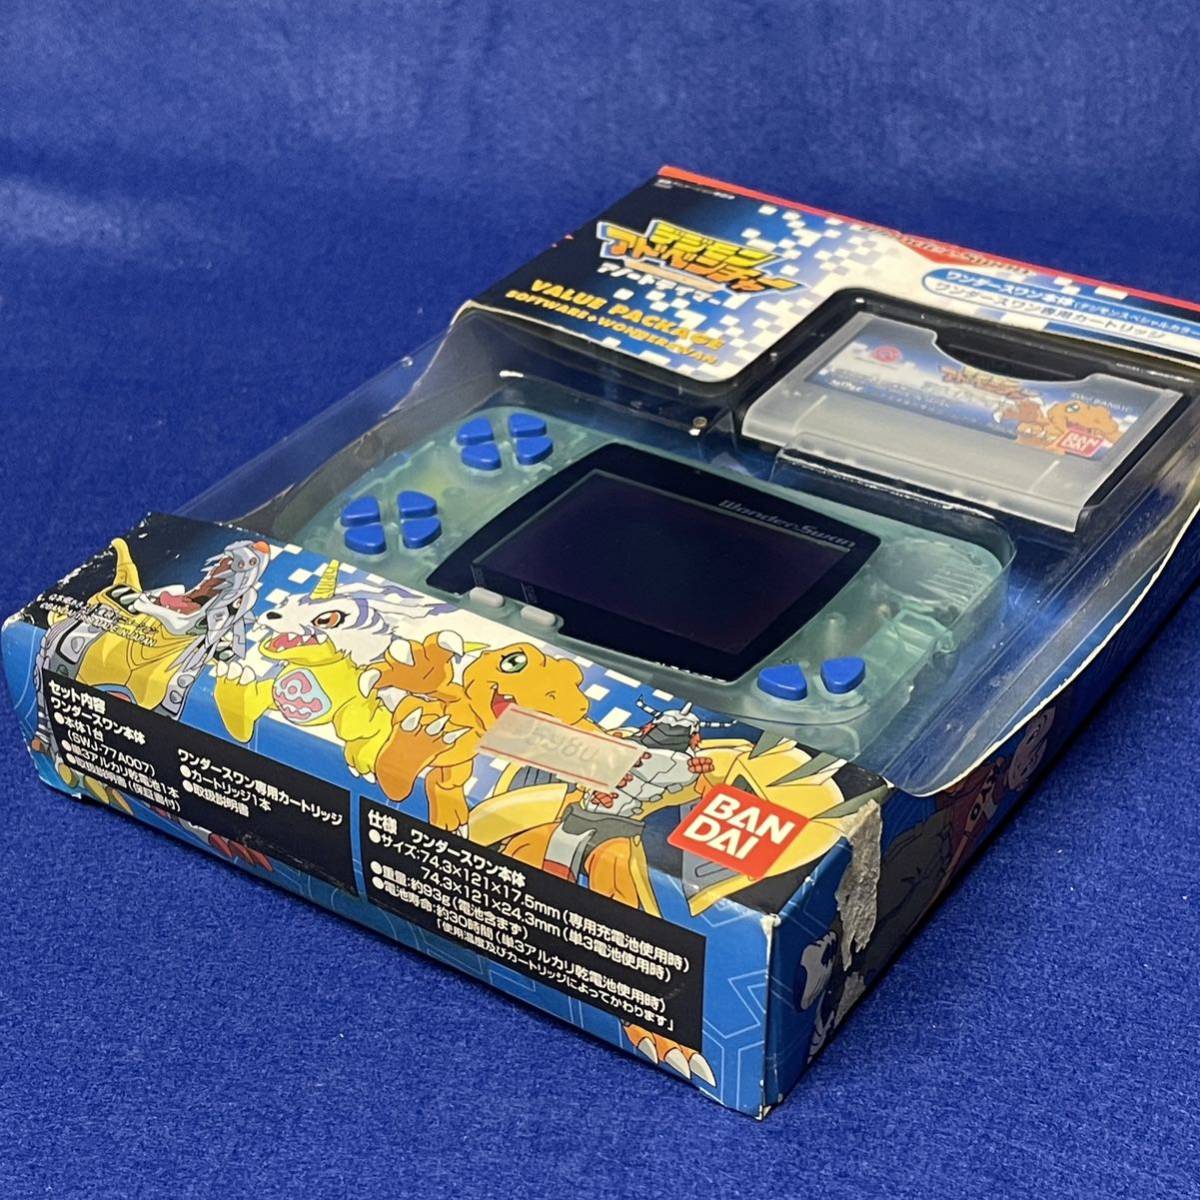  unopened new goods [ WonderSwan value package ] digimon adventure l retro game that time thing domestic regular goods original Showa era game 